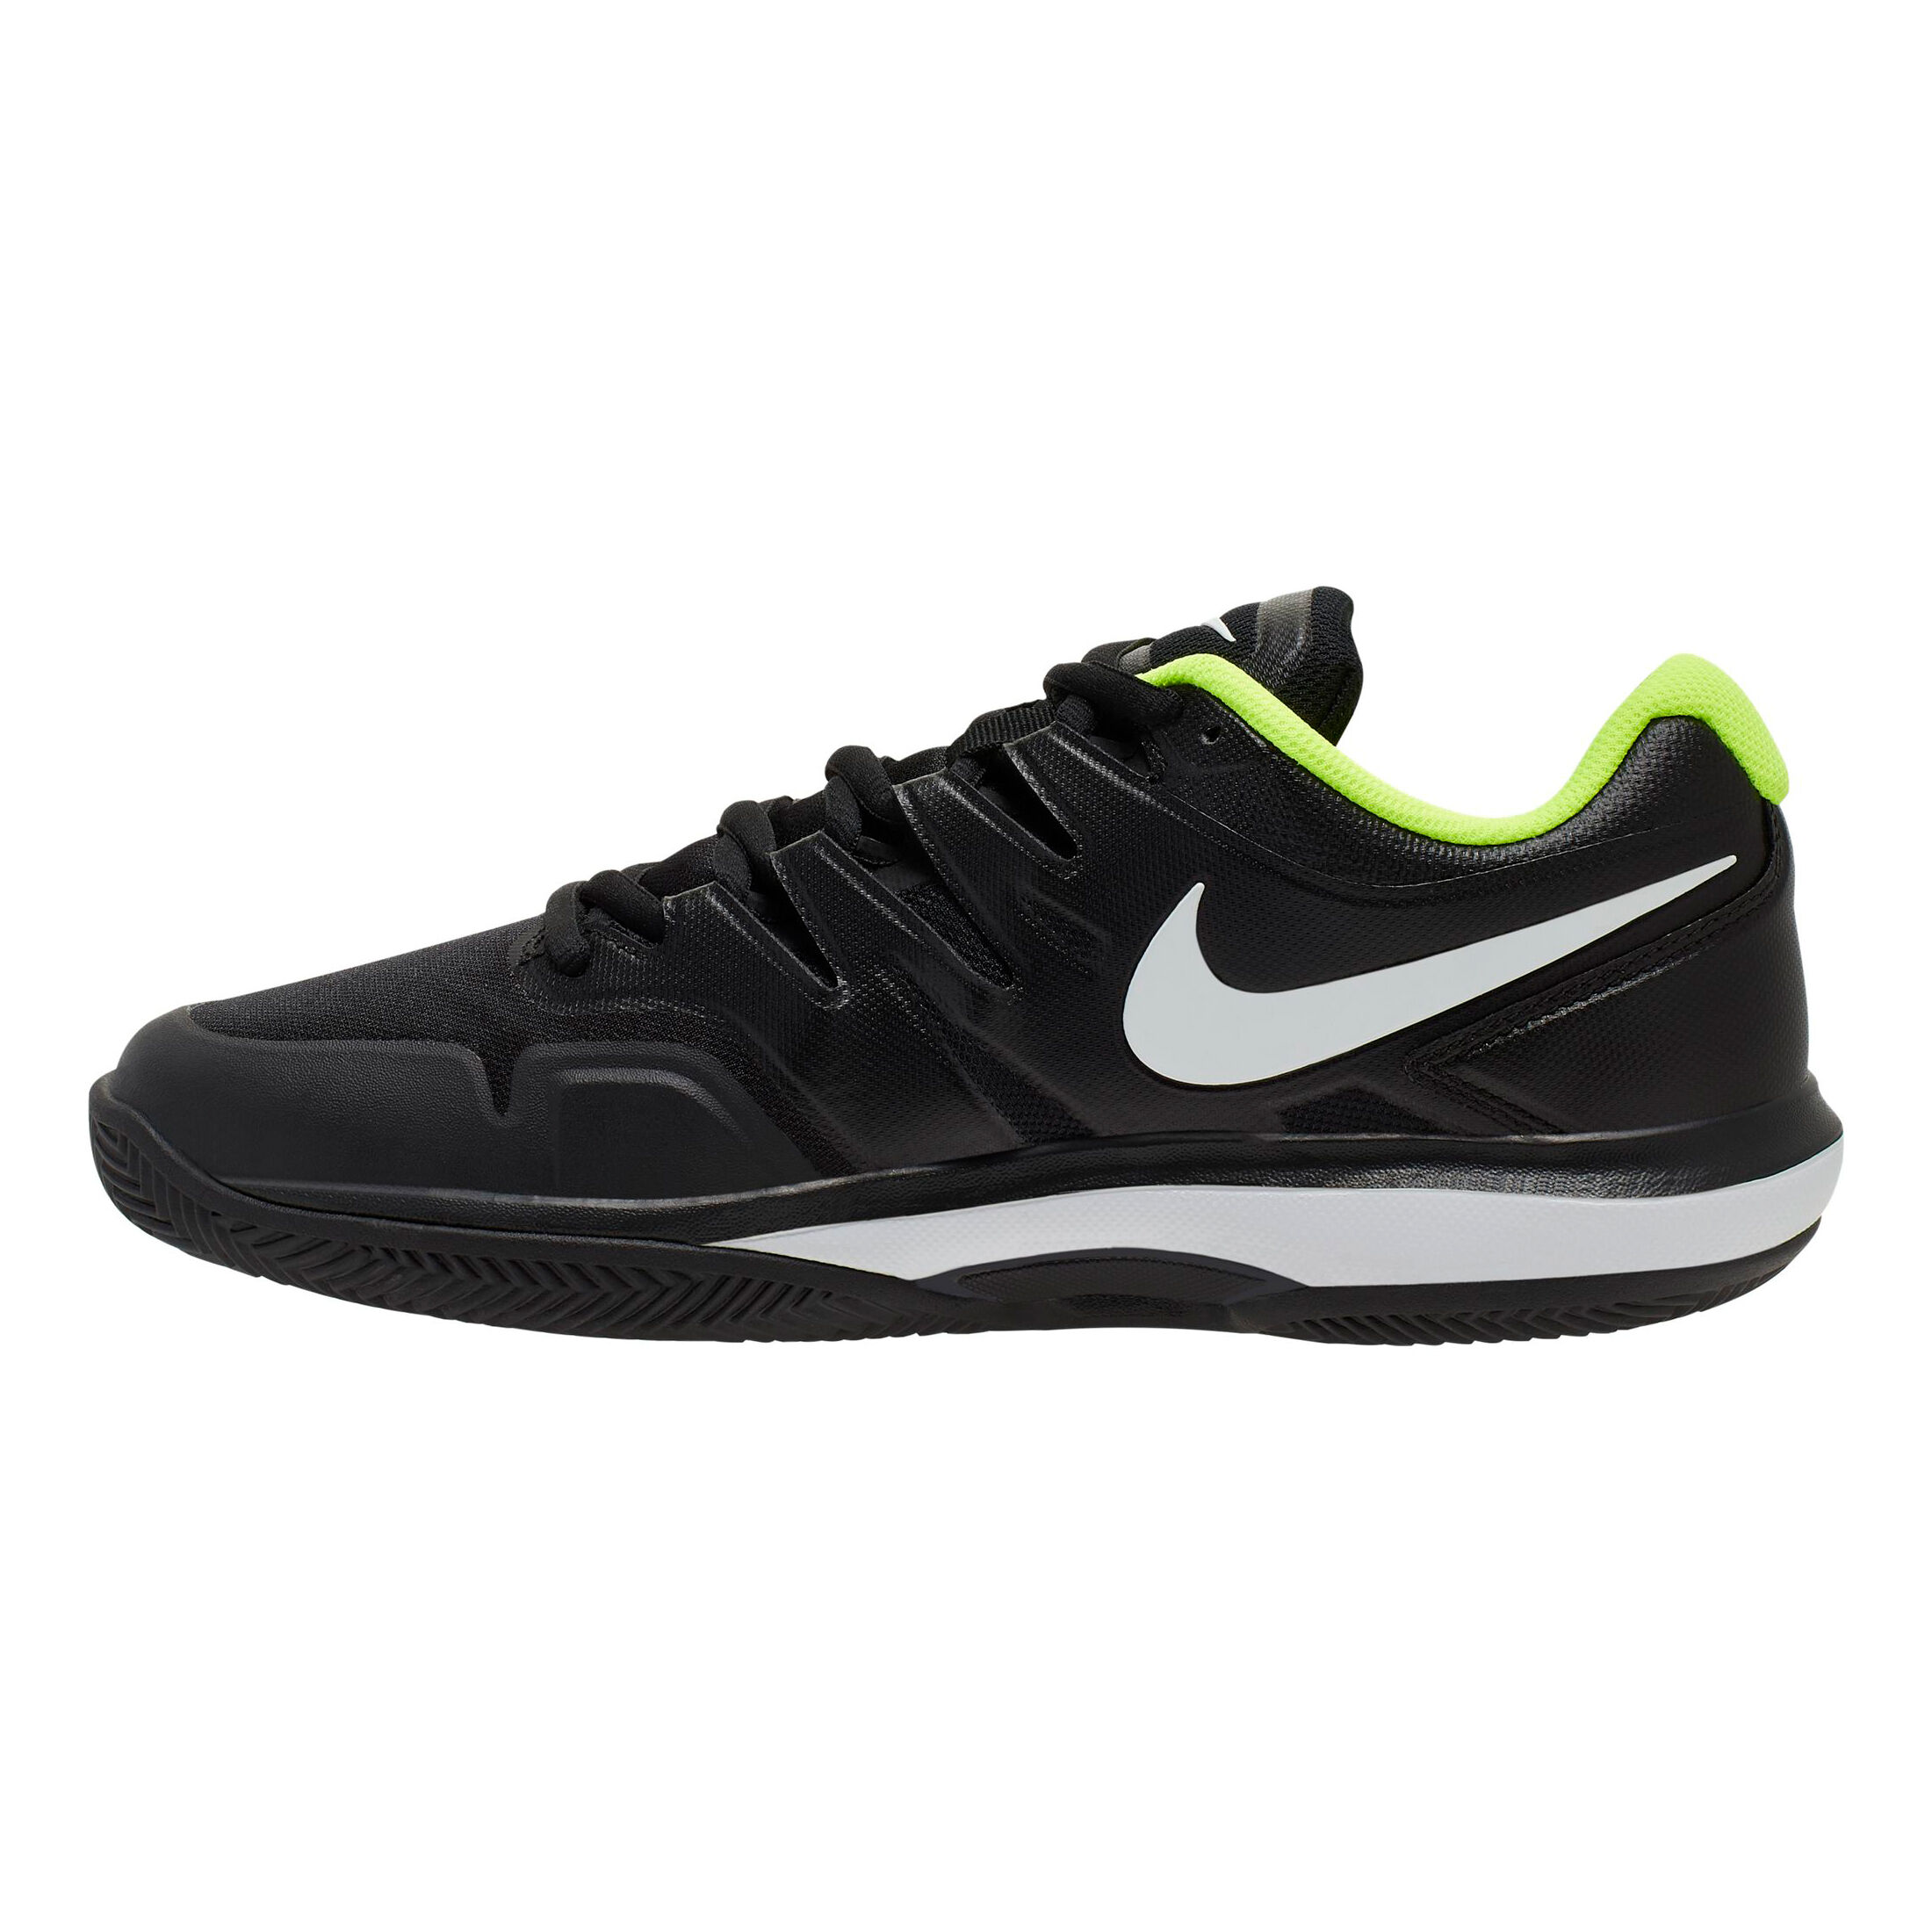 Nike Air Zoom Prestige Clay Court Shoe Men - Black, White